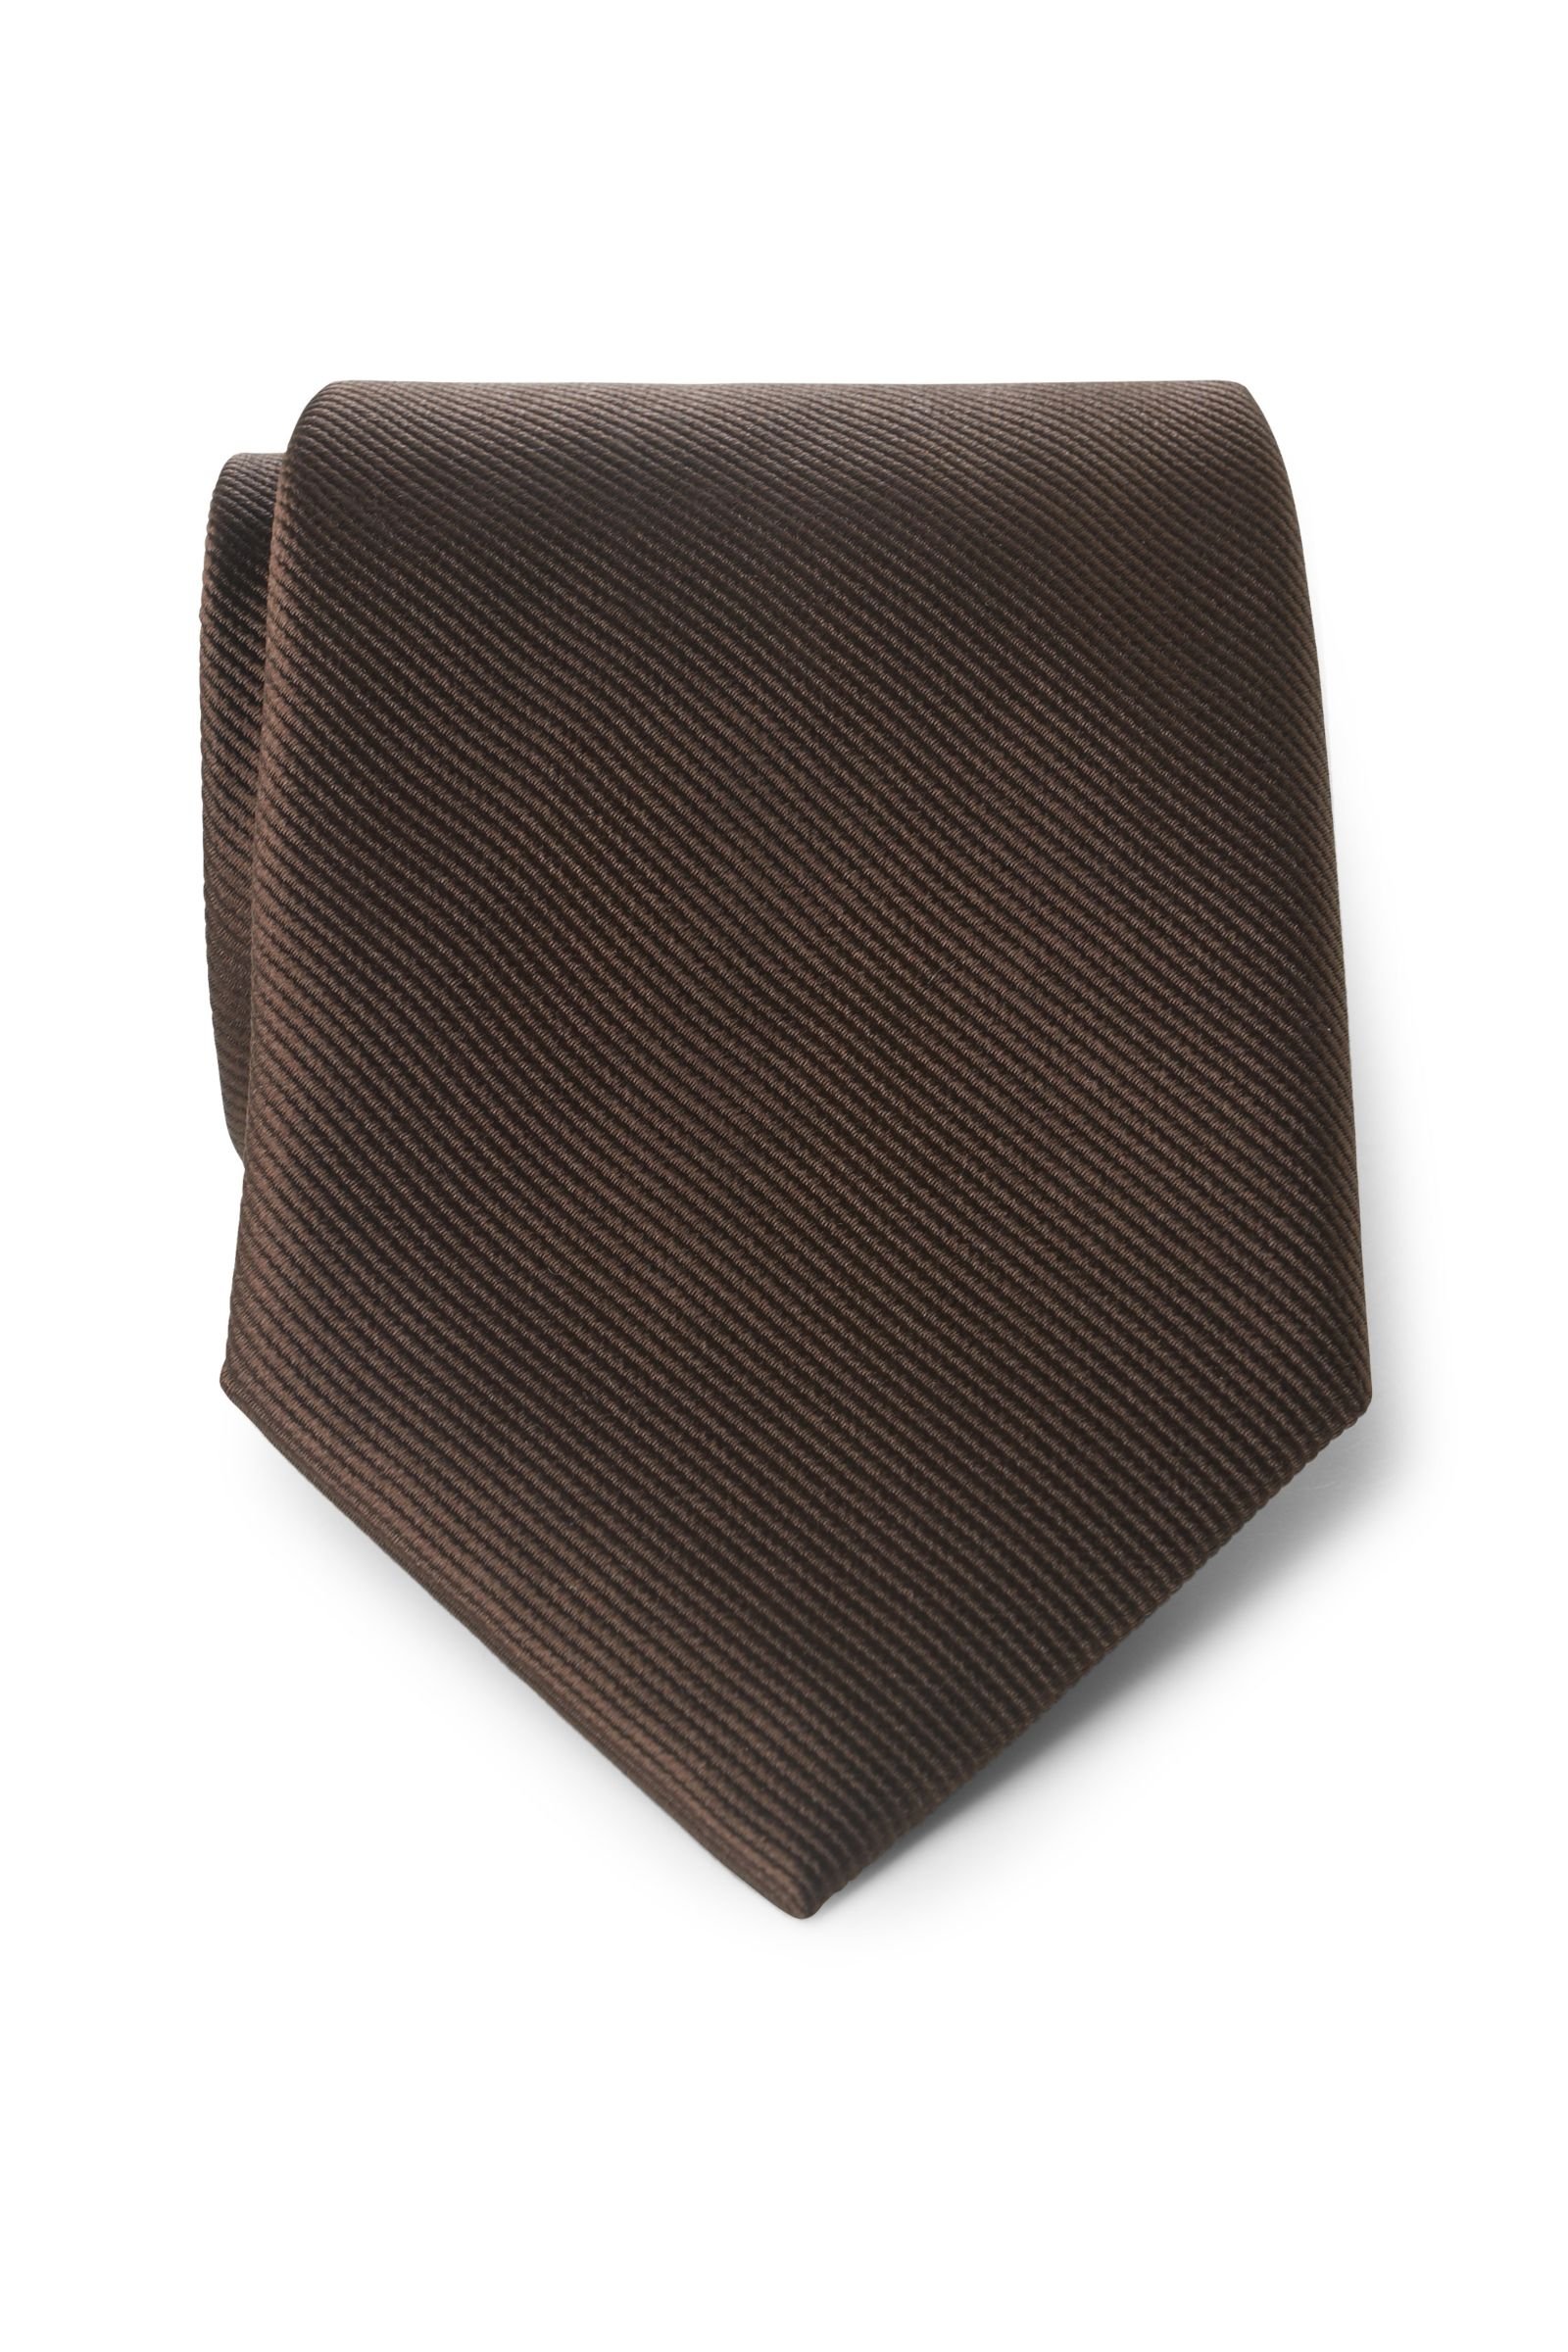 Krawatte braun/ocker gemustert